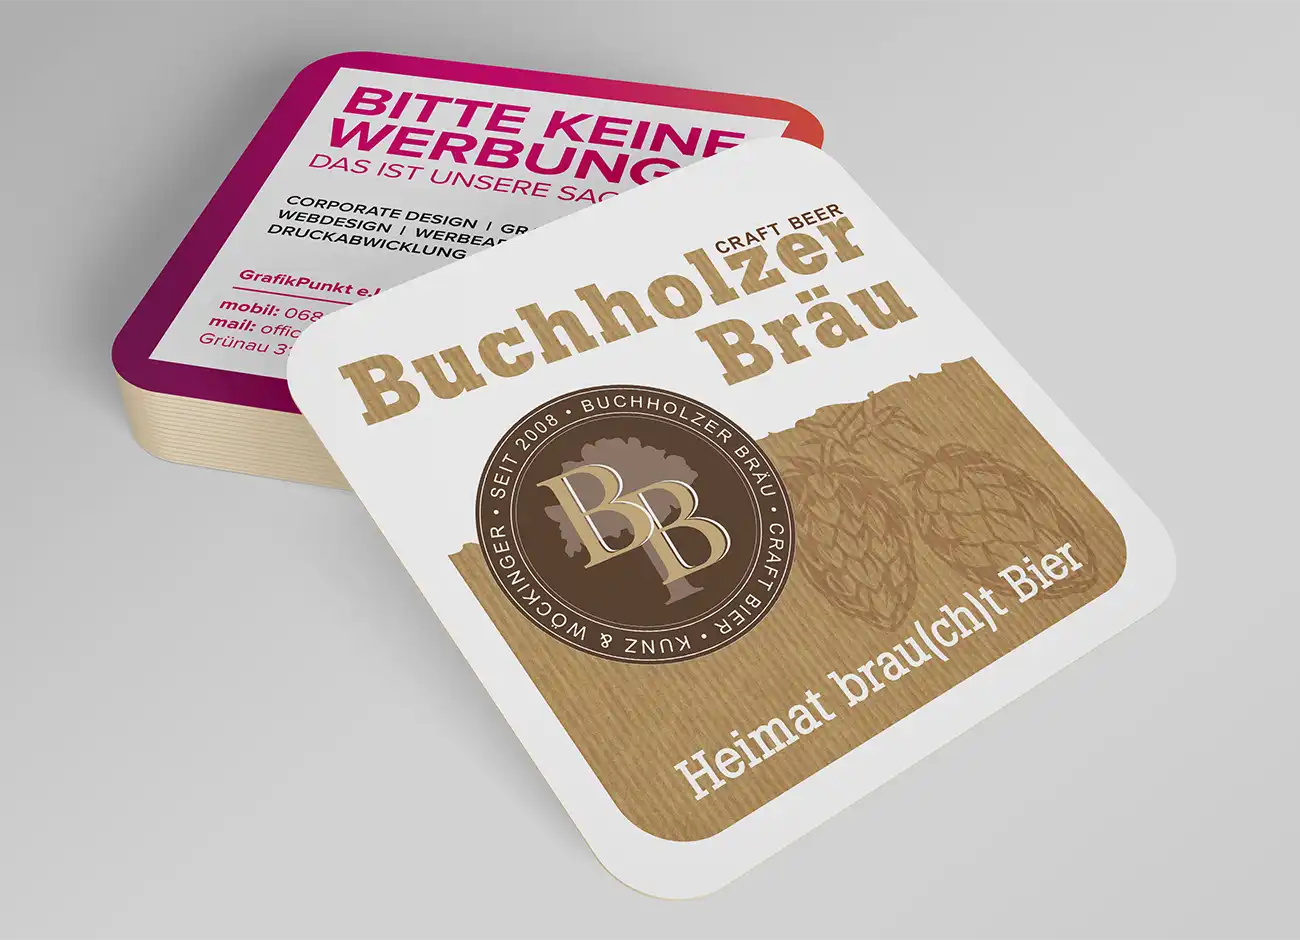 Buchholzer Bräu- Bierplattl